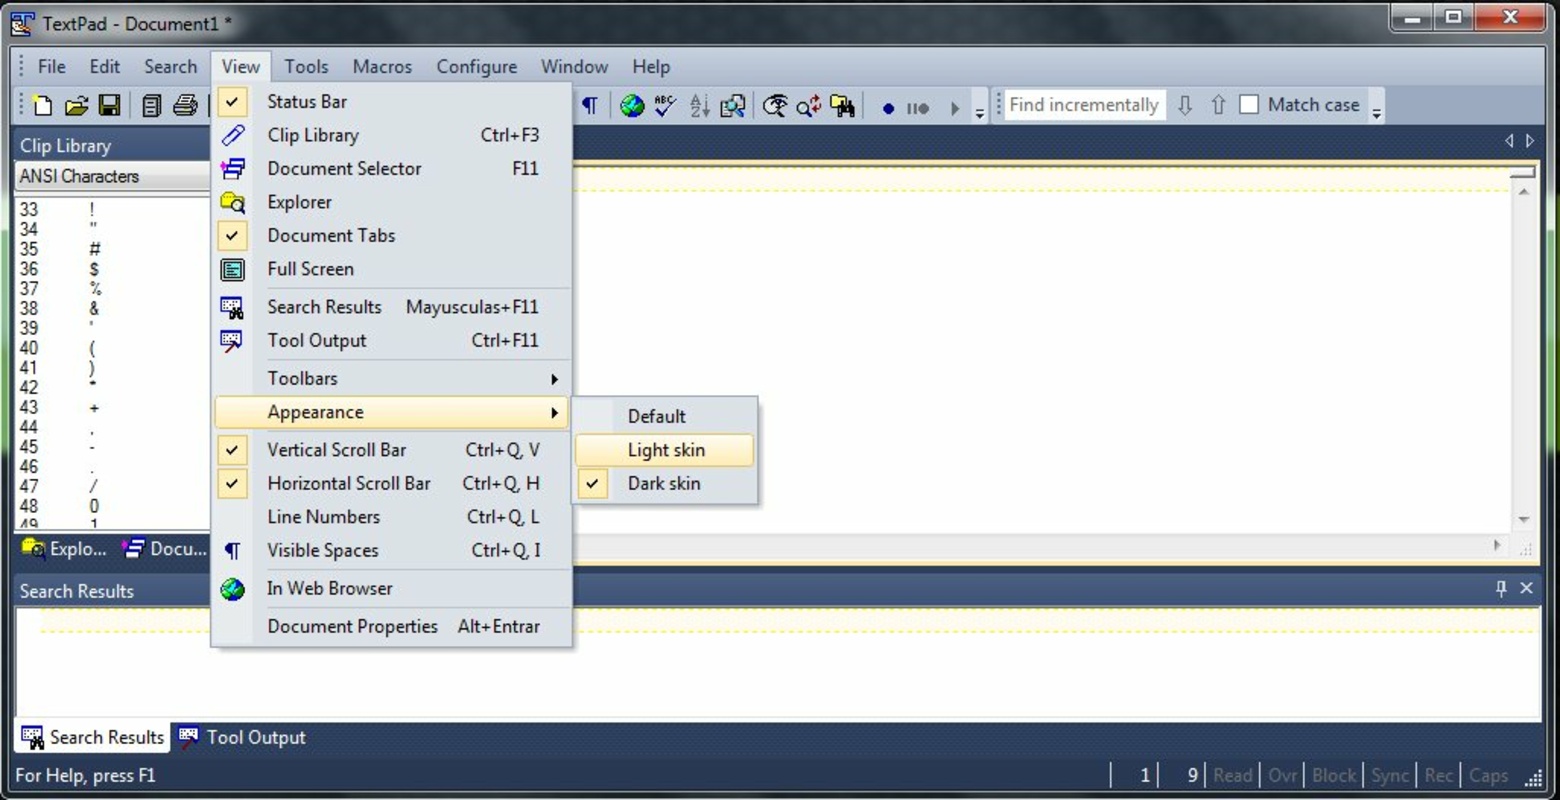 TextPad 8.15.0 for Windows Screenshot 4